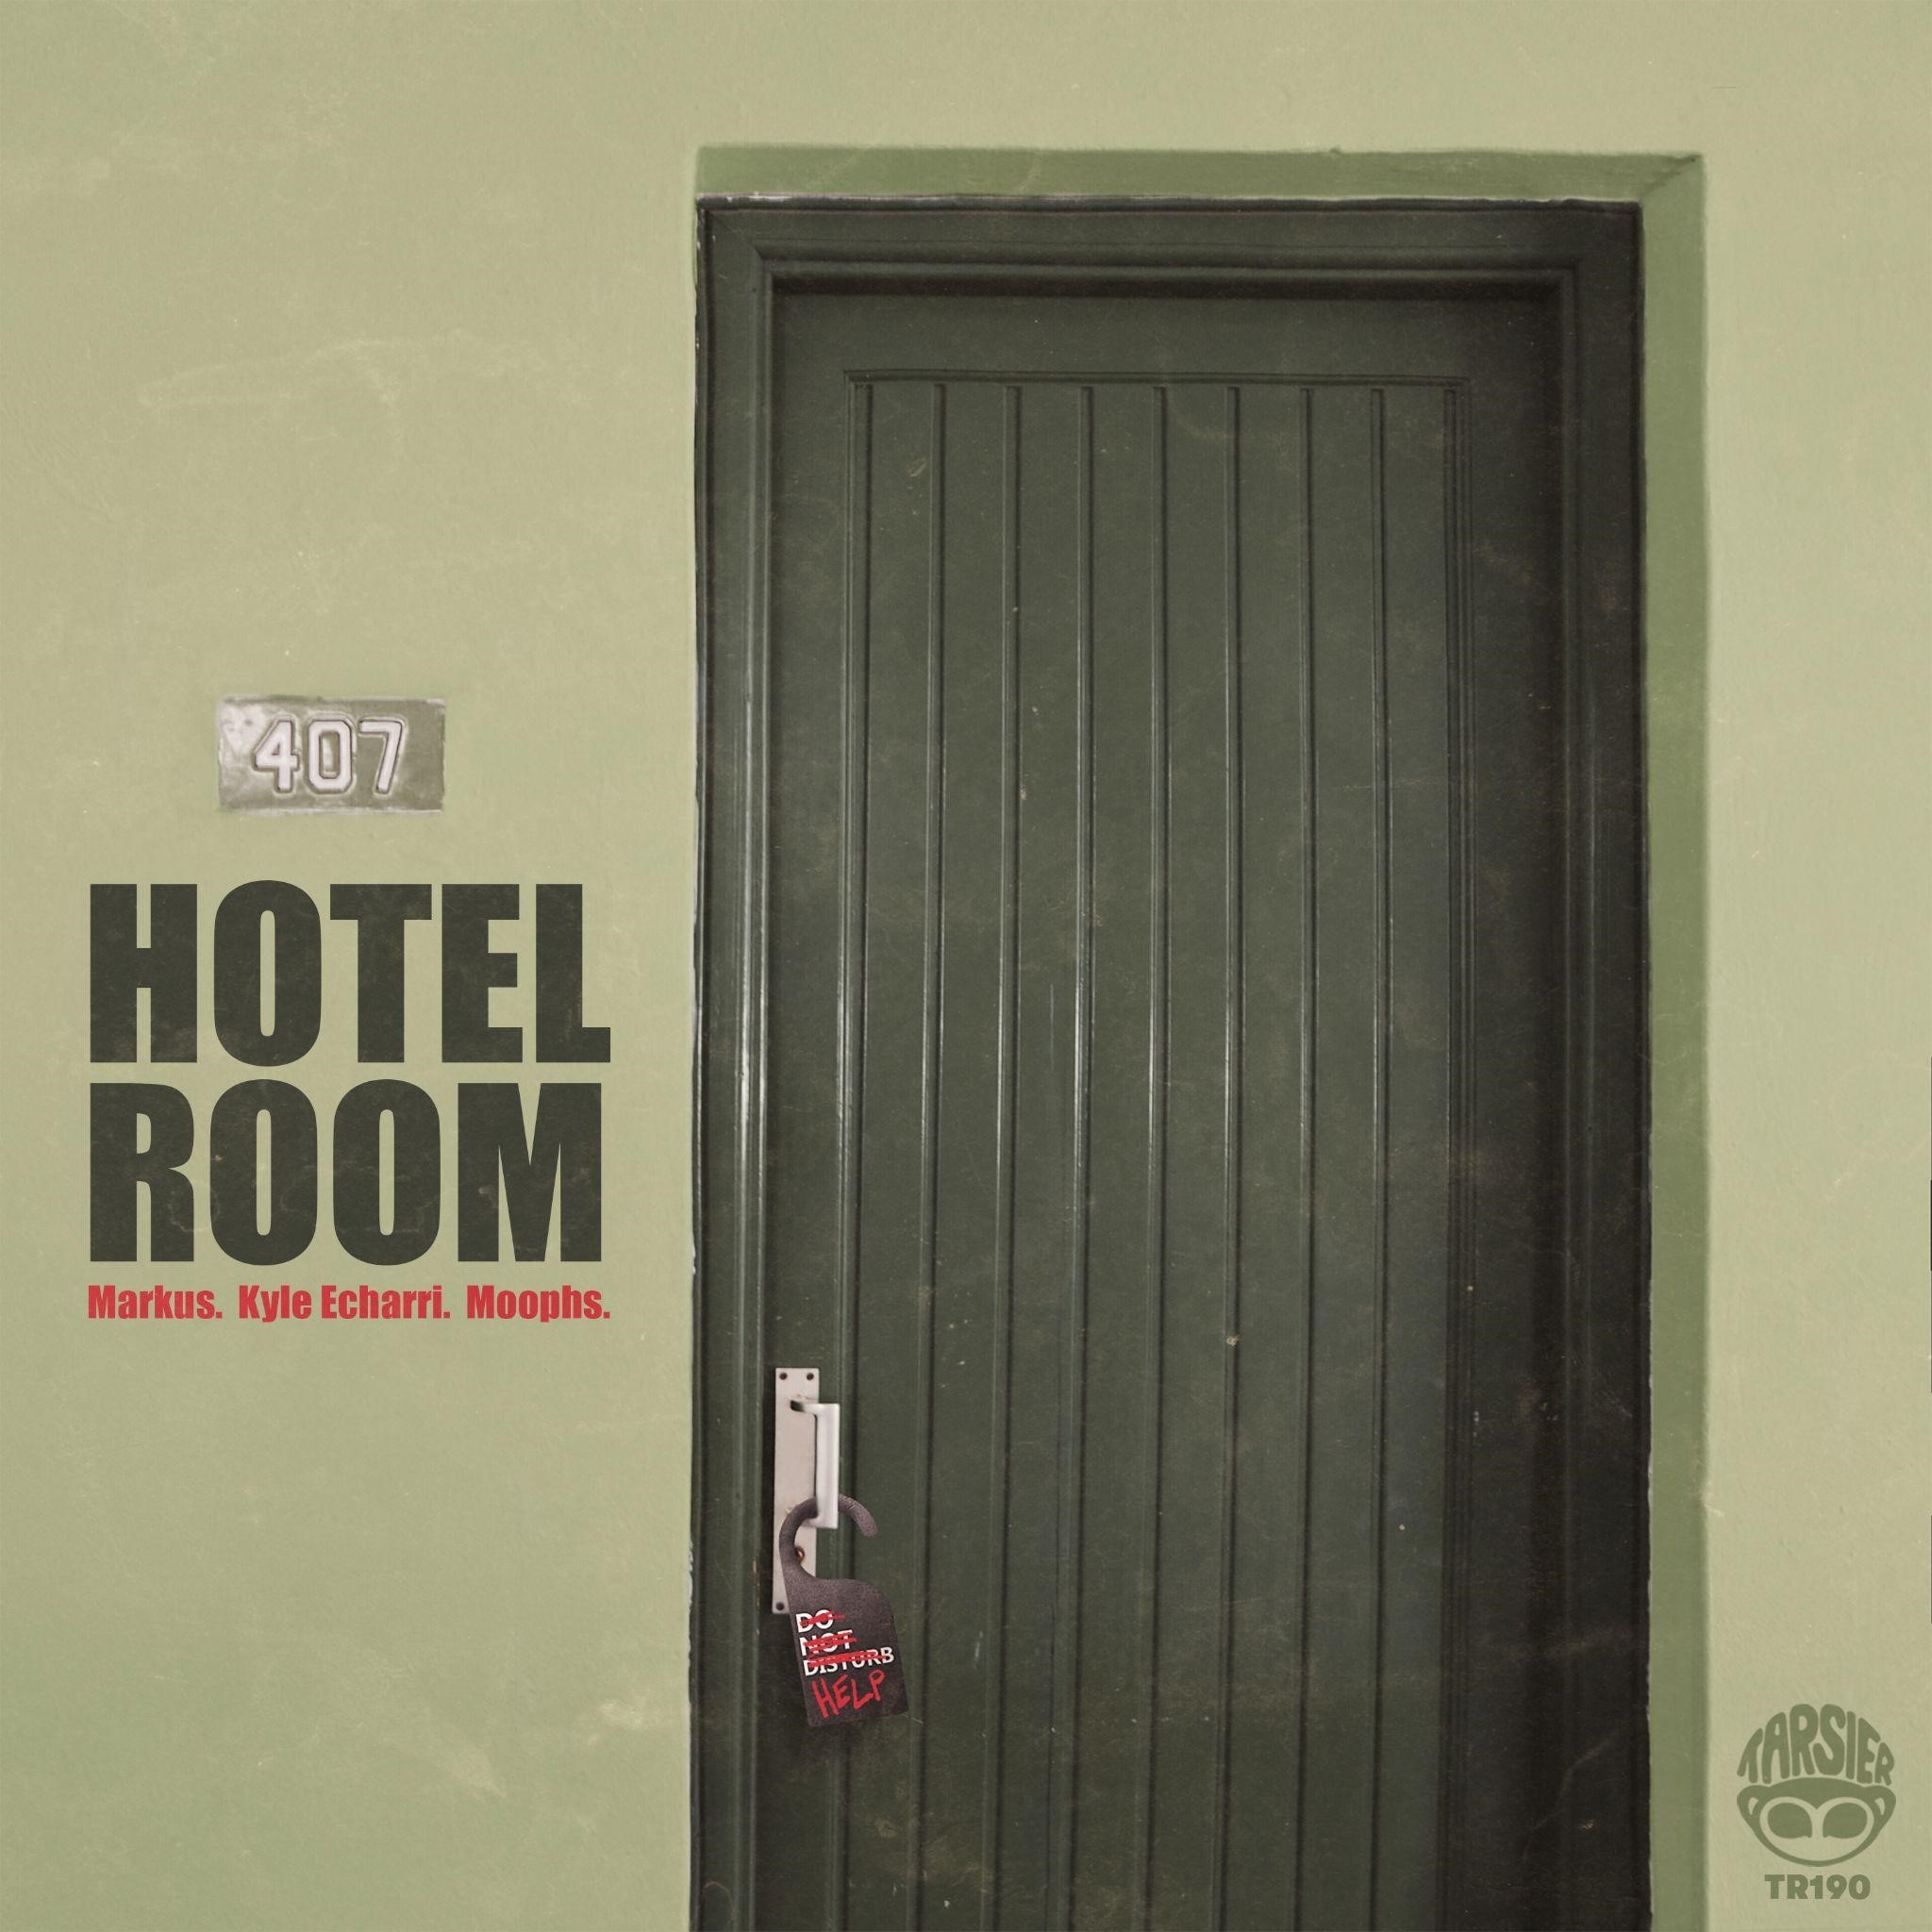 Hotel Room by Markus, Kyle Echarri, and Moophs